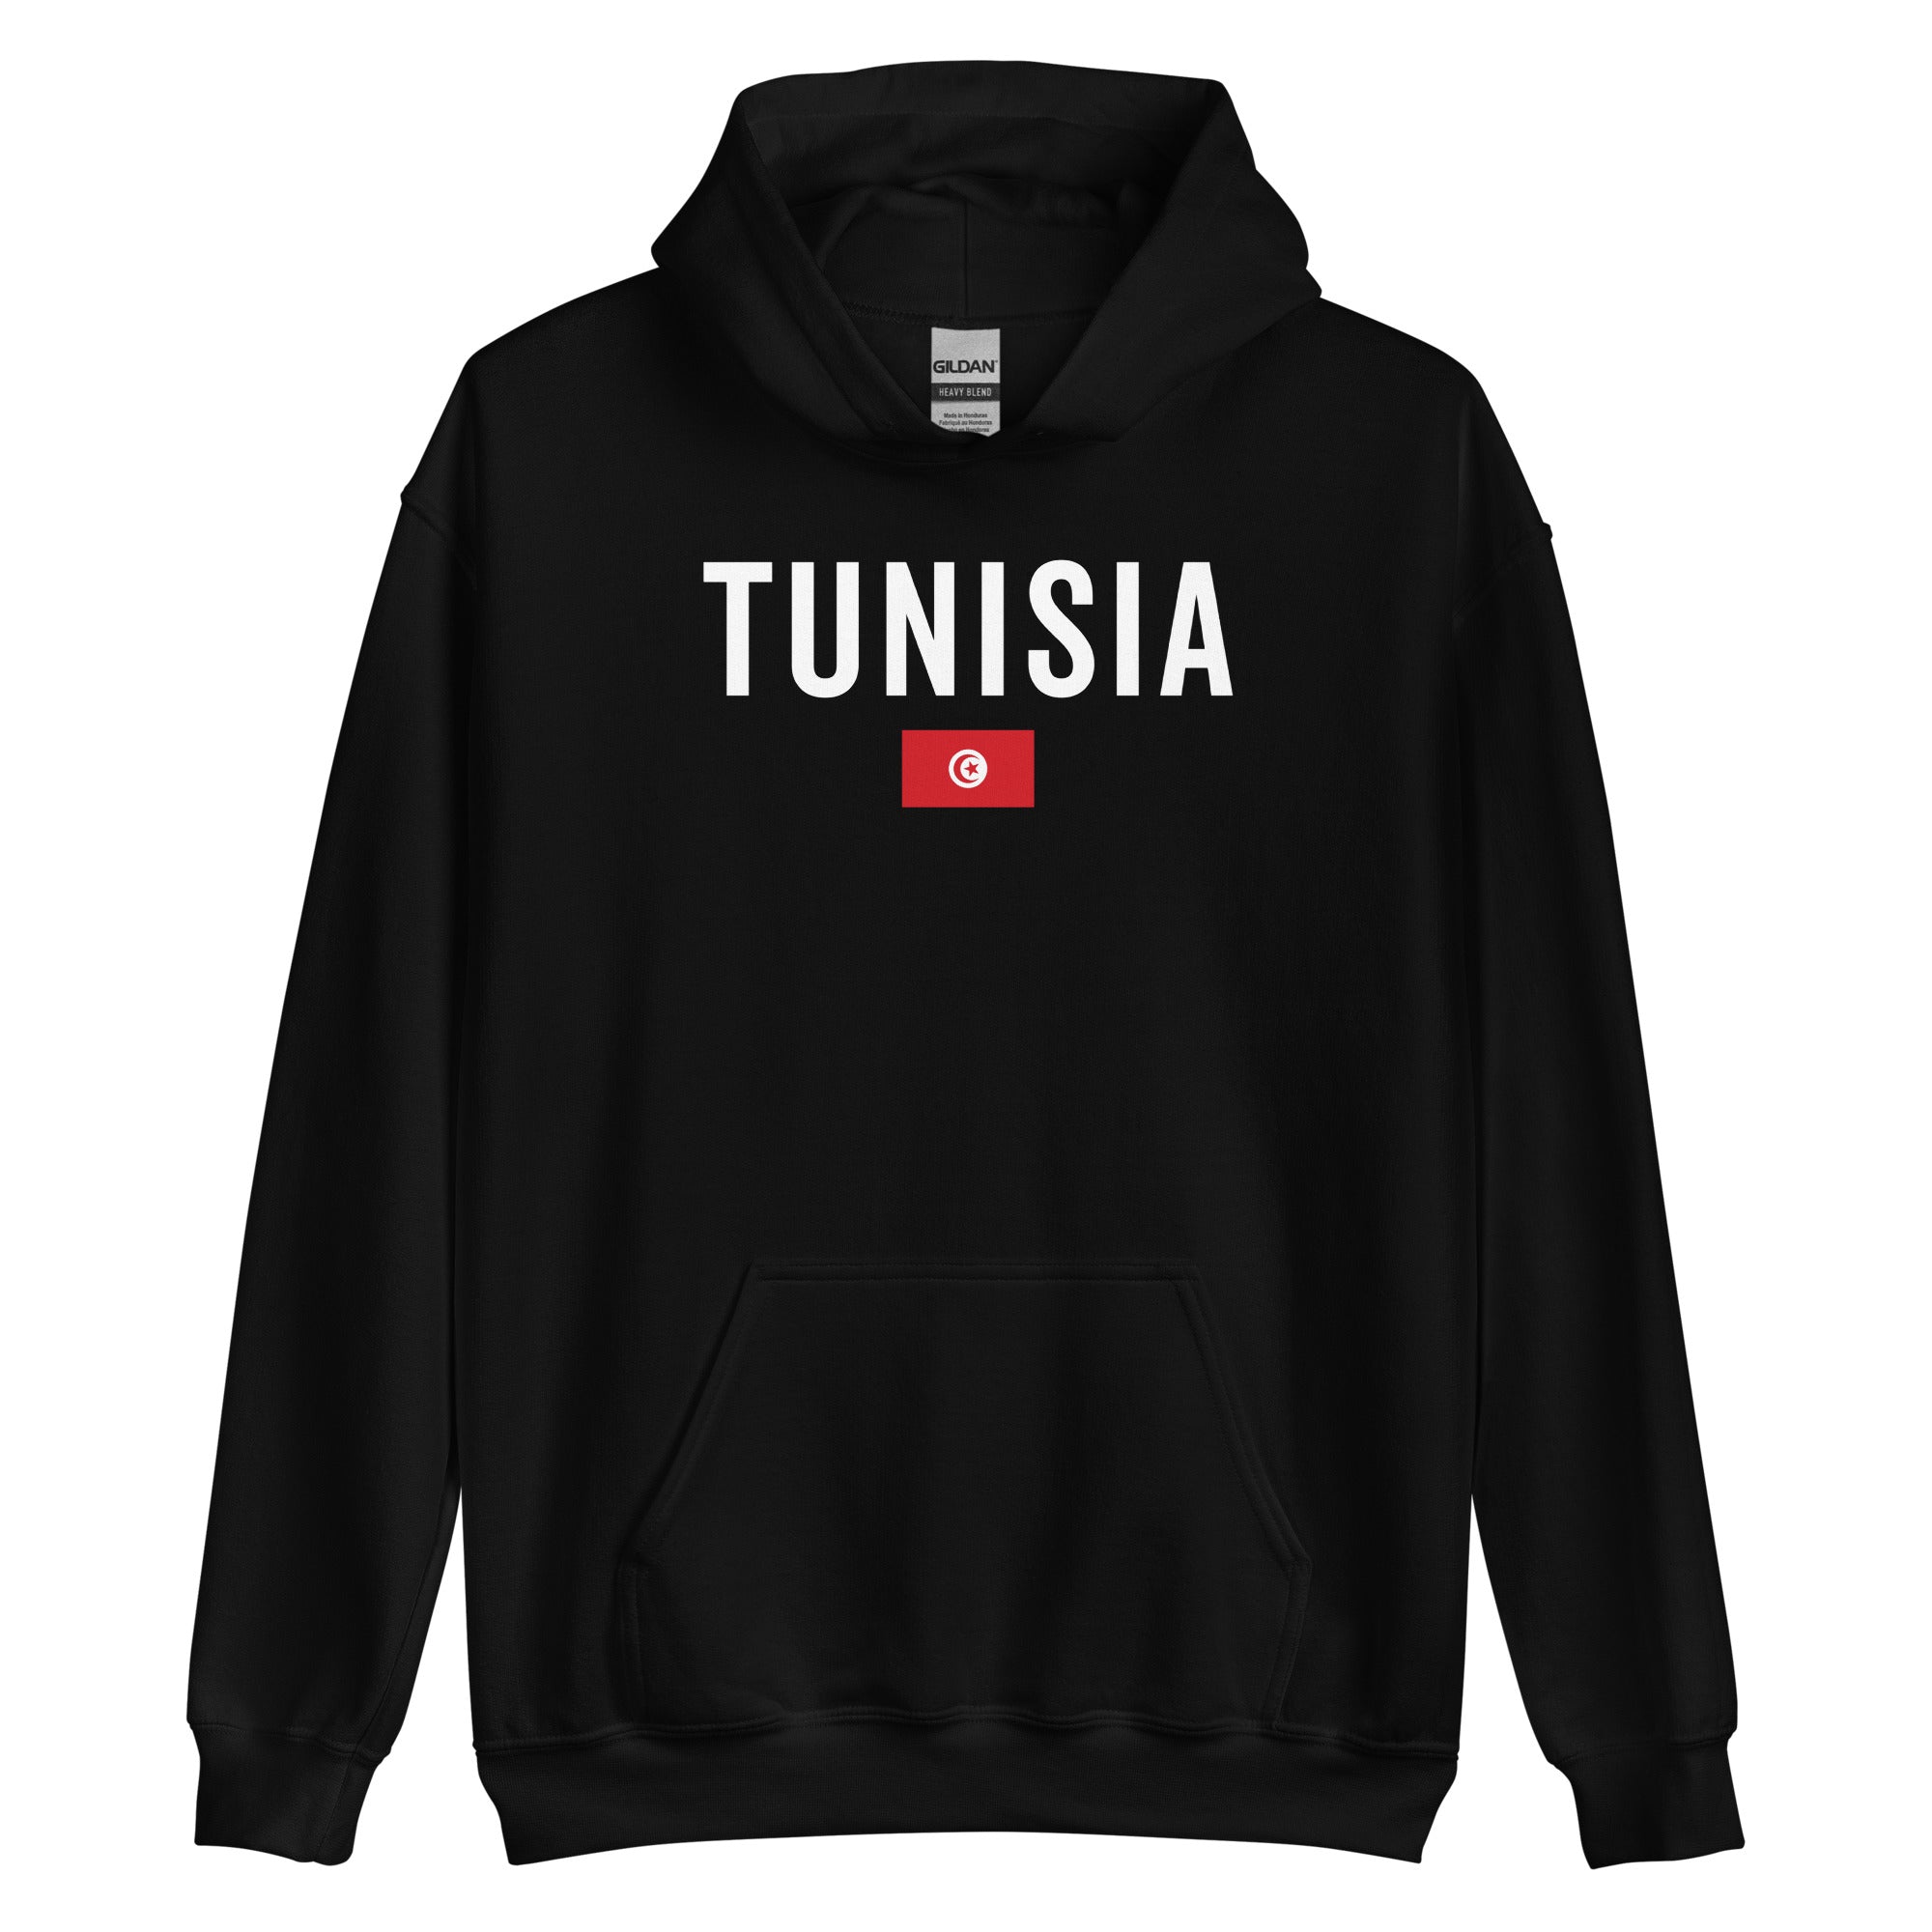 Tunisia Flag Hoodie